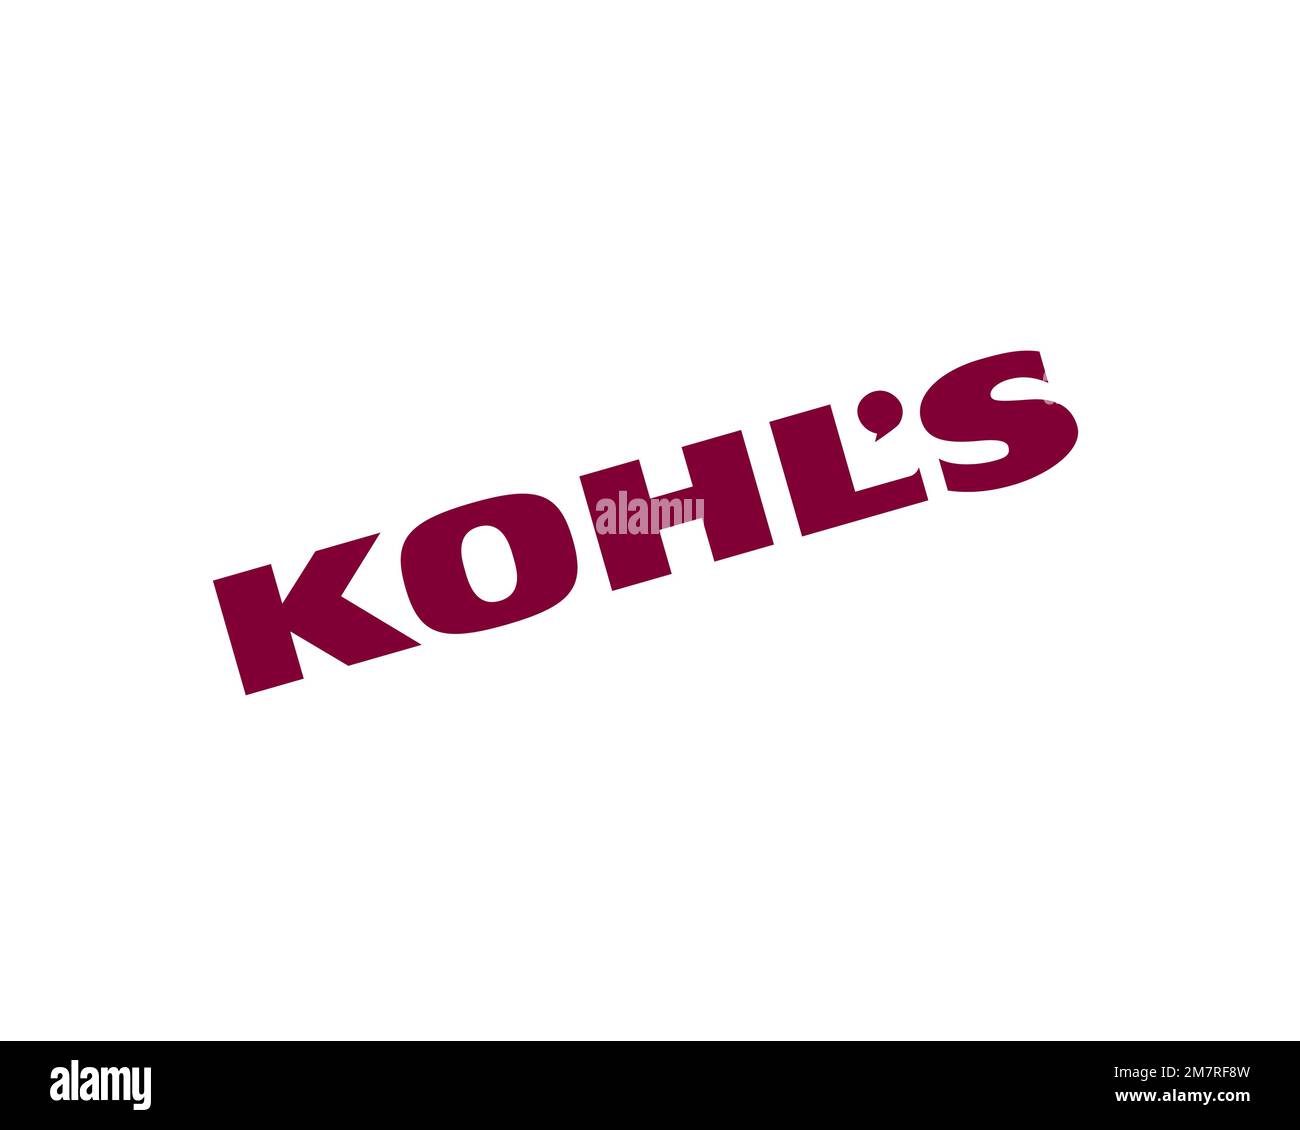 Kohl's, Rotated Logo, White Background Stock Photo - Alamy